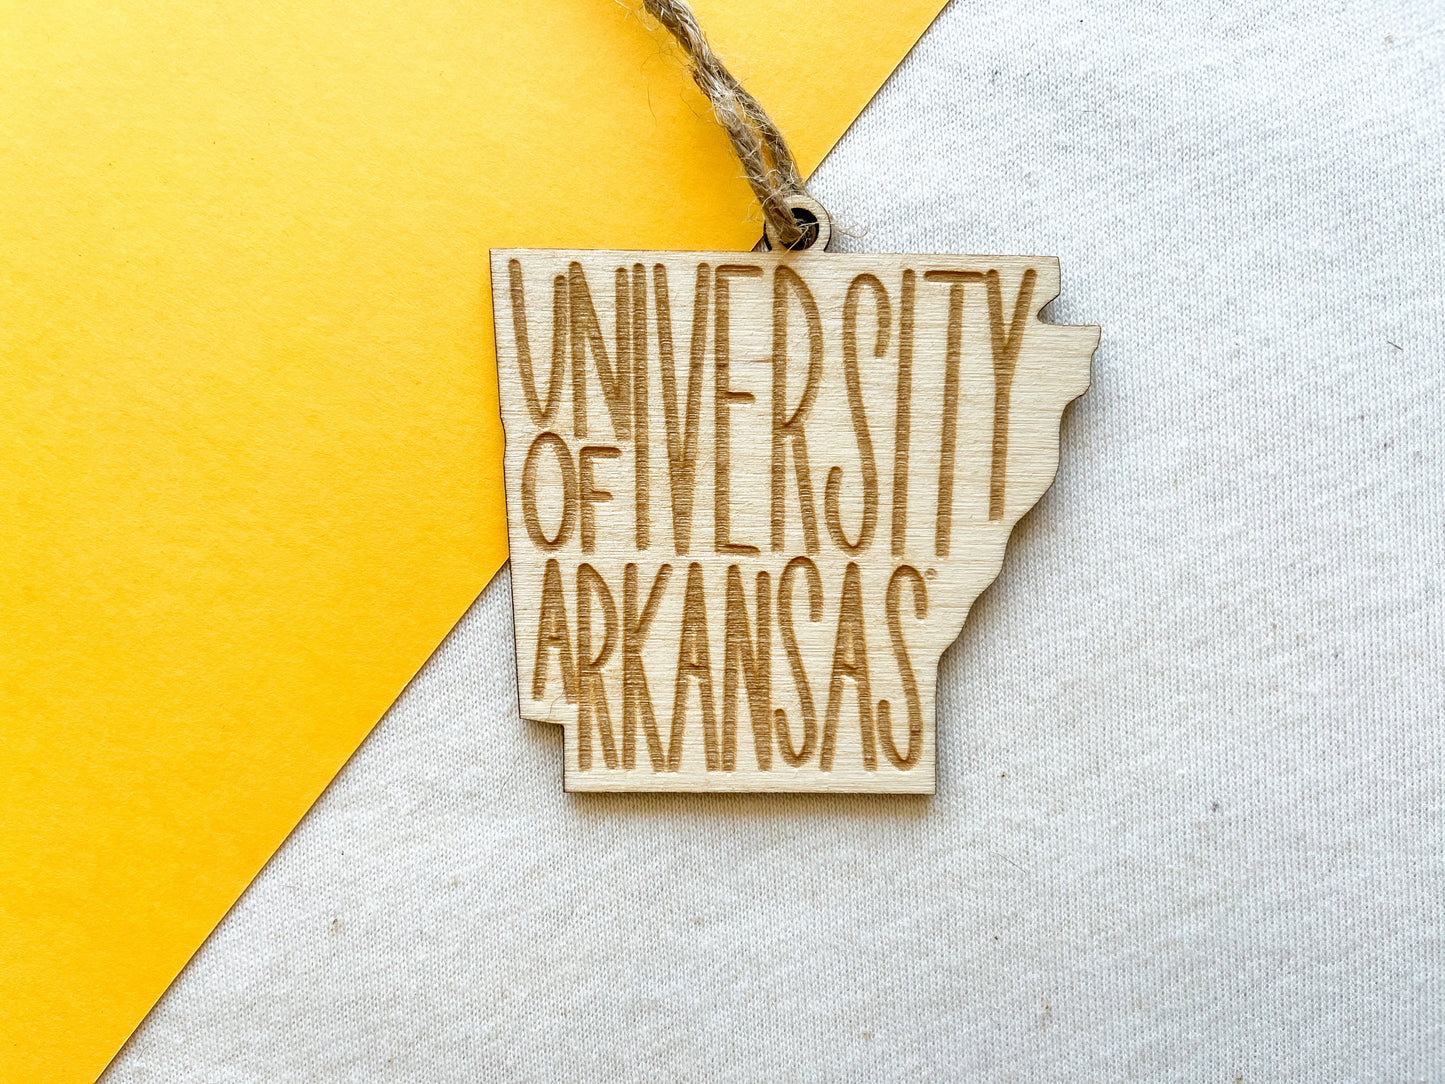 University of Arkansas Ornament